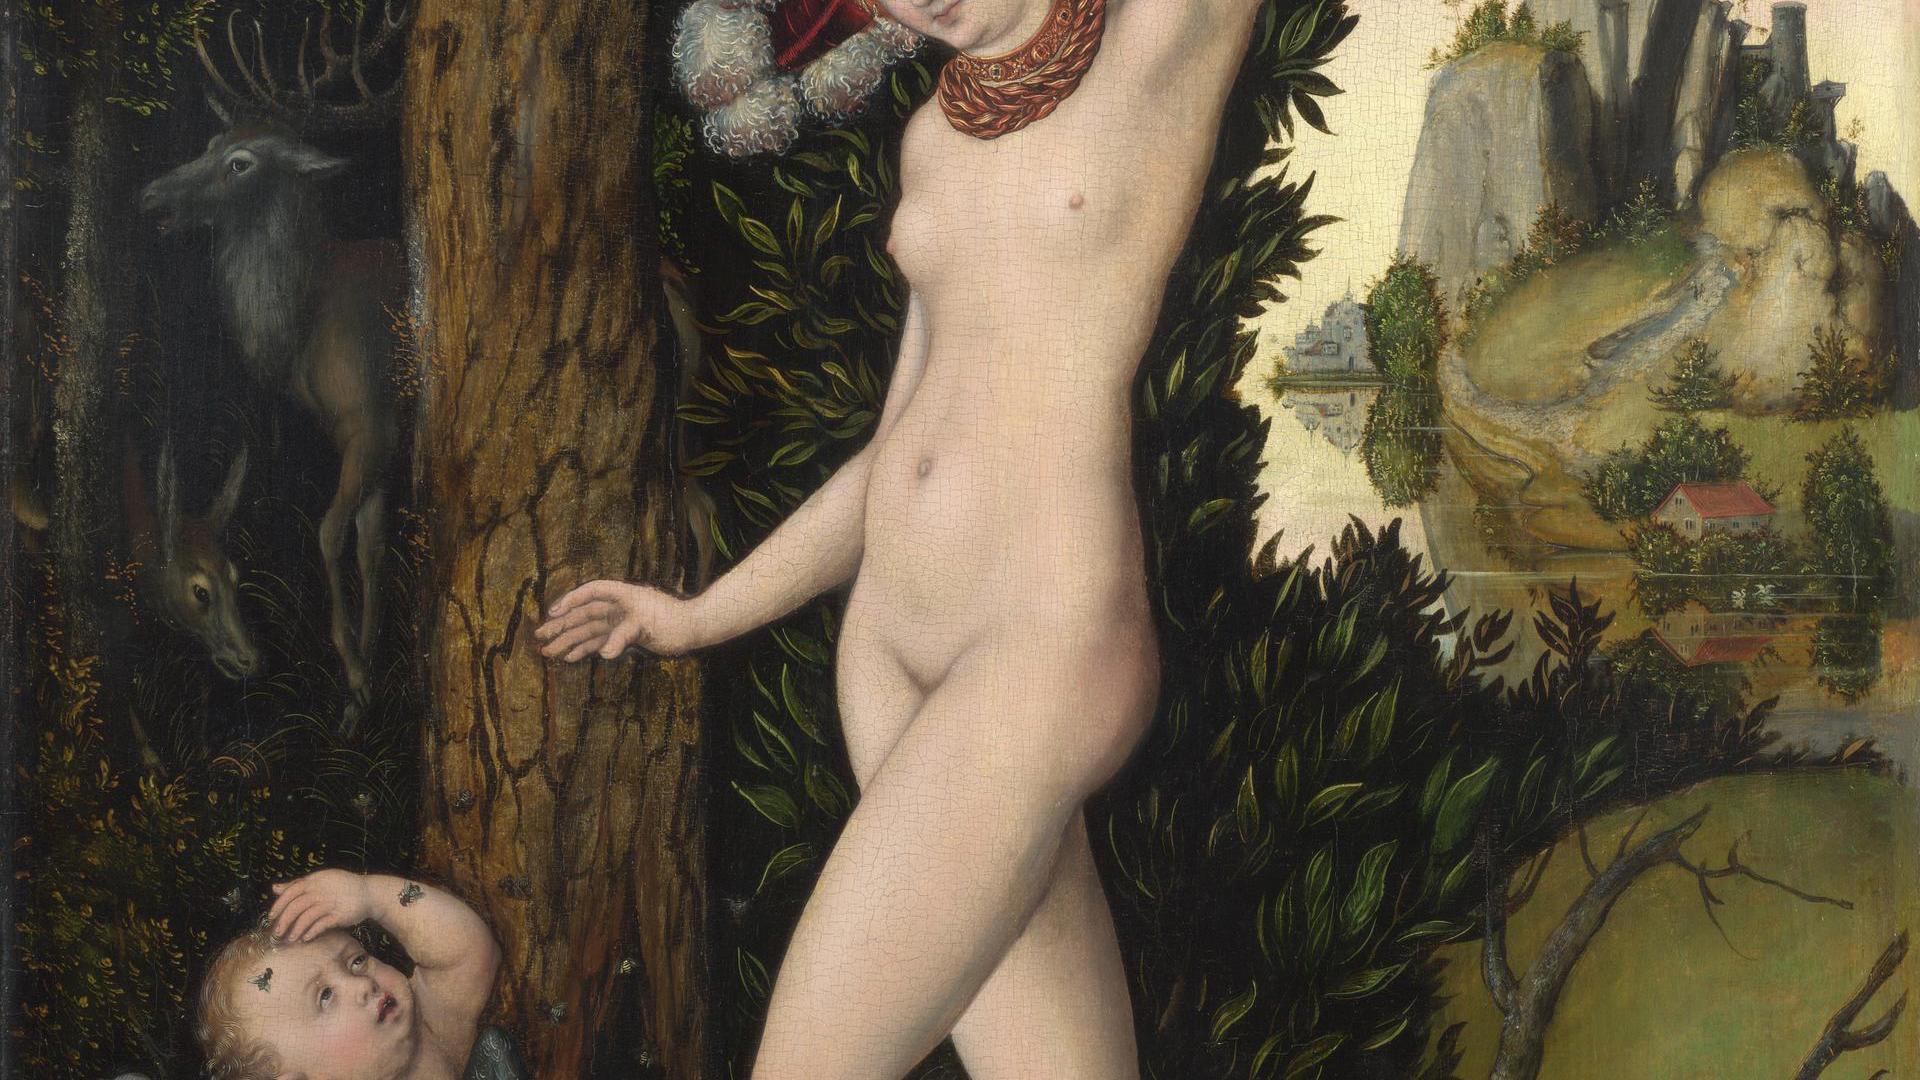 Cupid complaining to Venus by Lucas Cranach the Elder